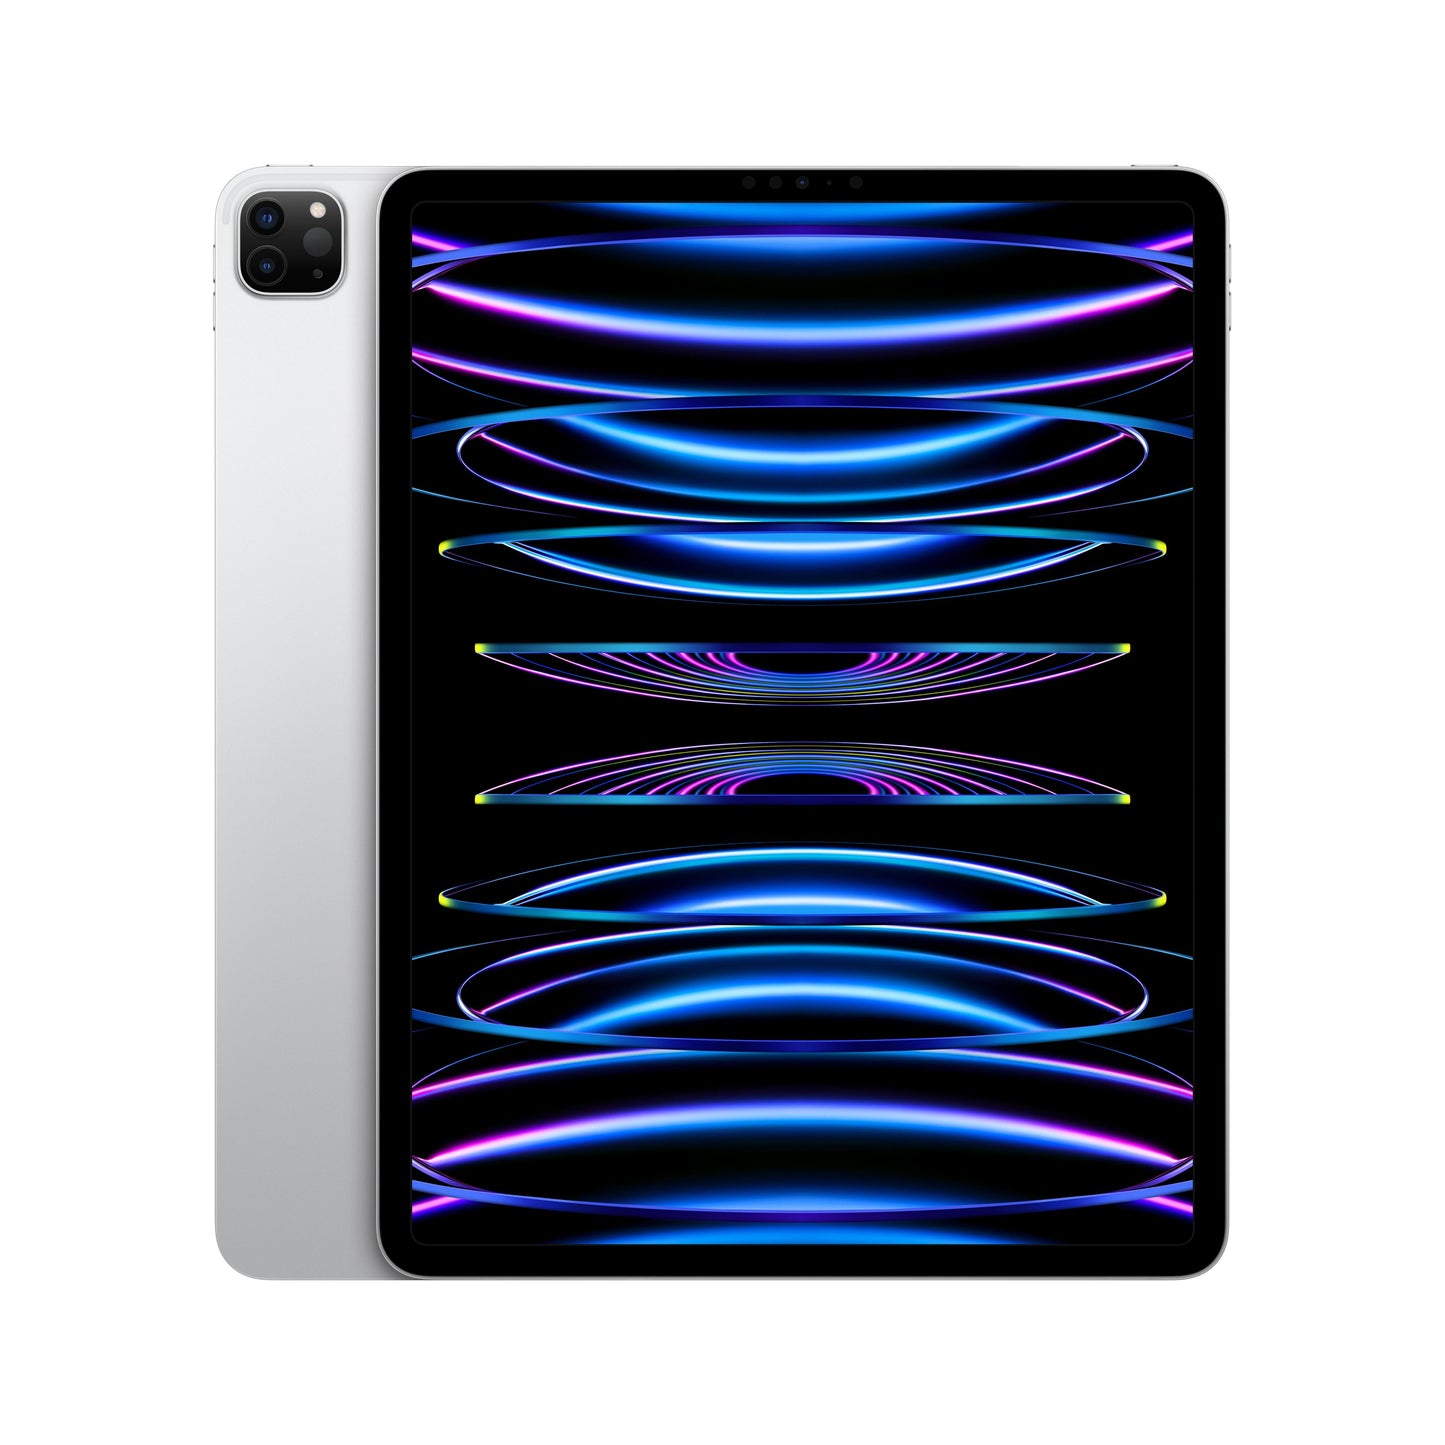 2022 12.9-inch iPad Pro Wi-Fi 128GB - Silver (6th generation)